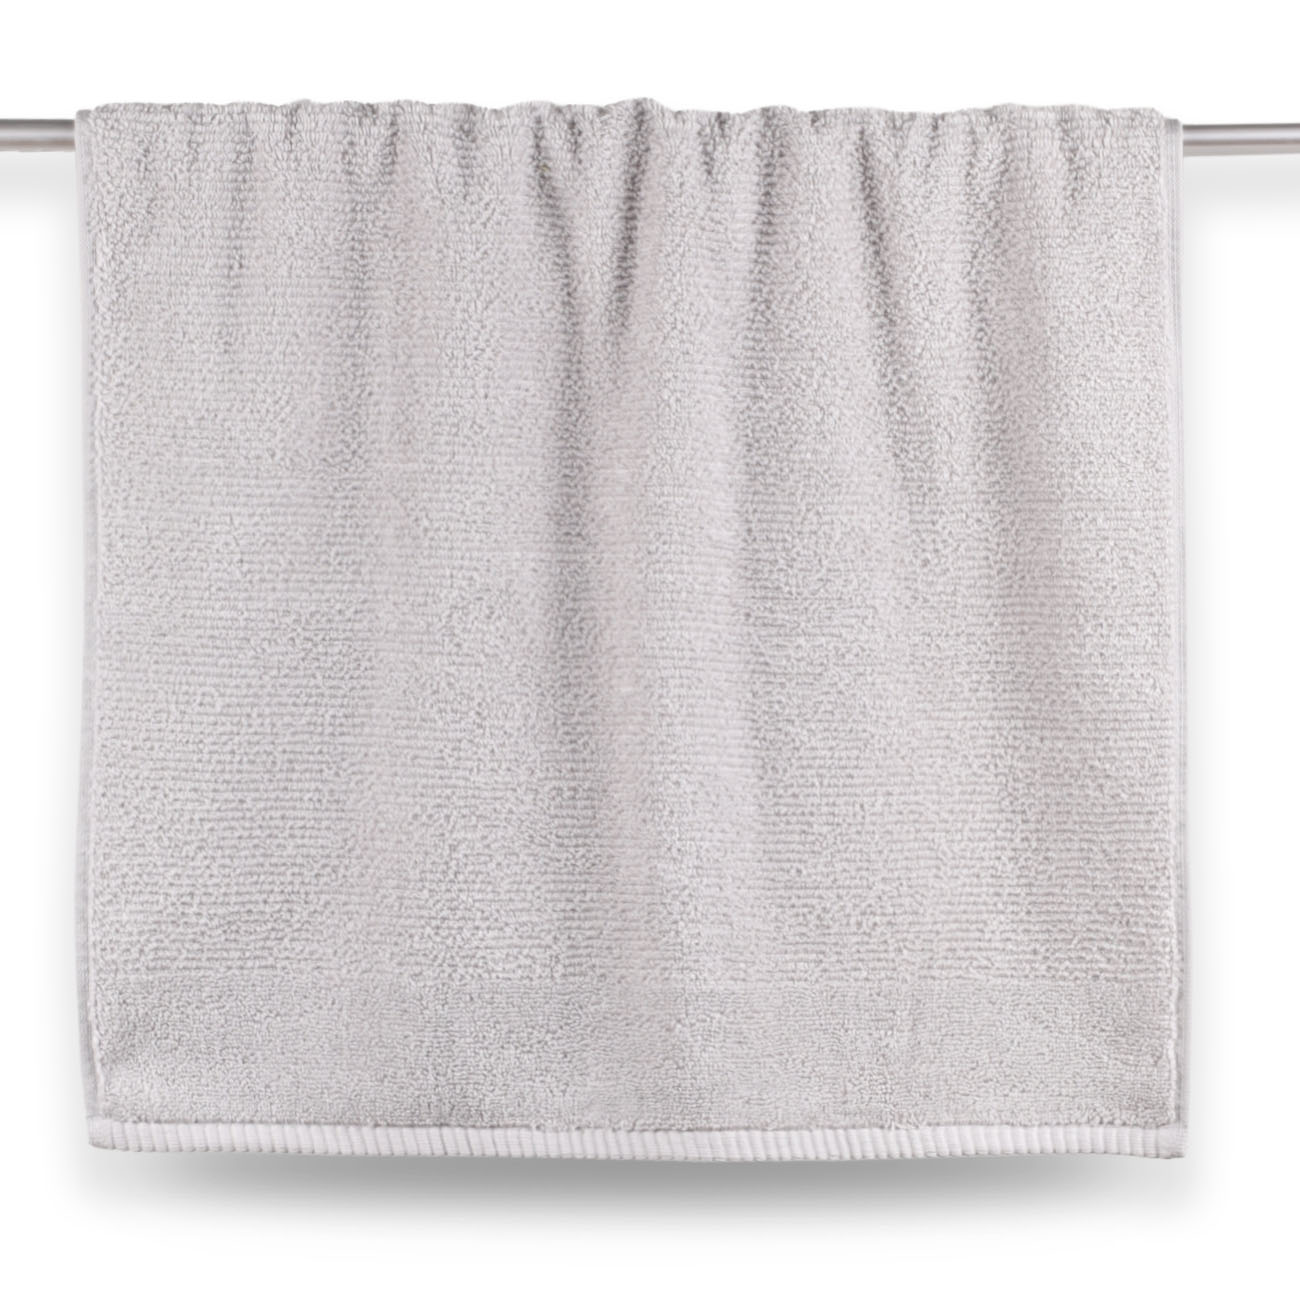 Towel, 50x90 cm, cotton, light grey, Terry cotton изображение № 3